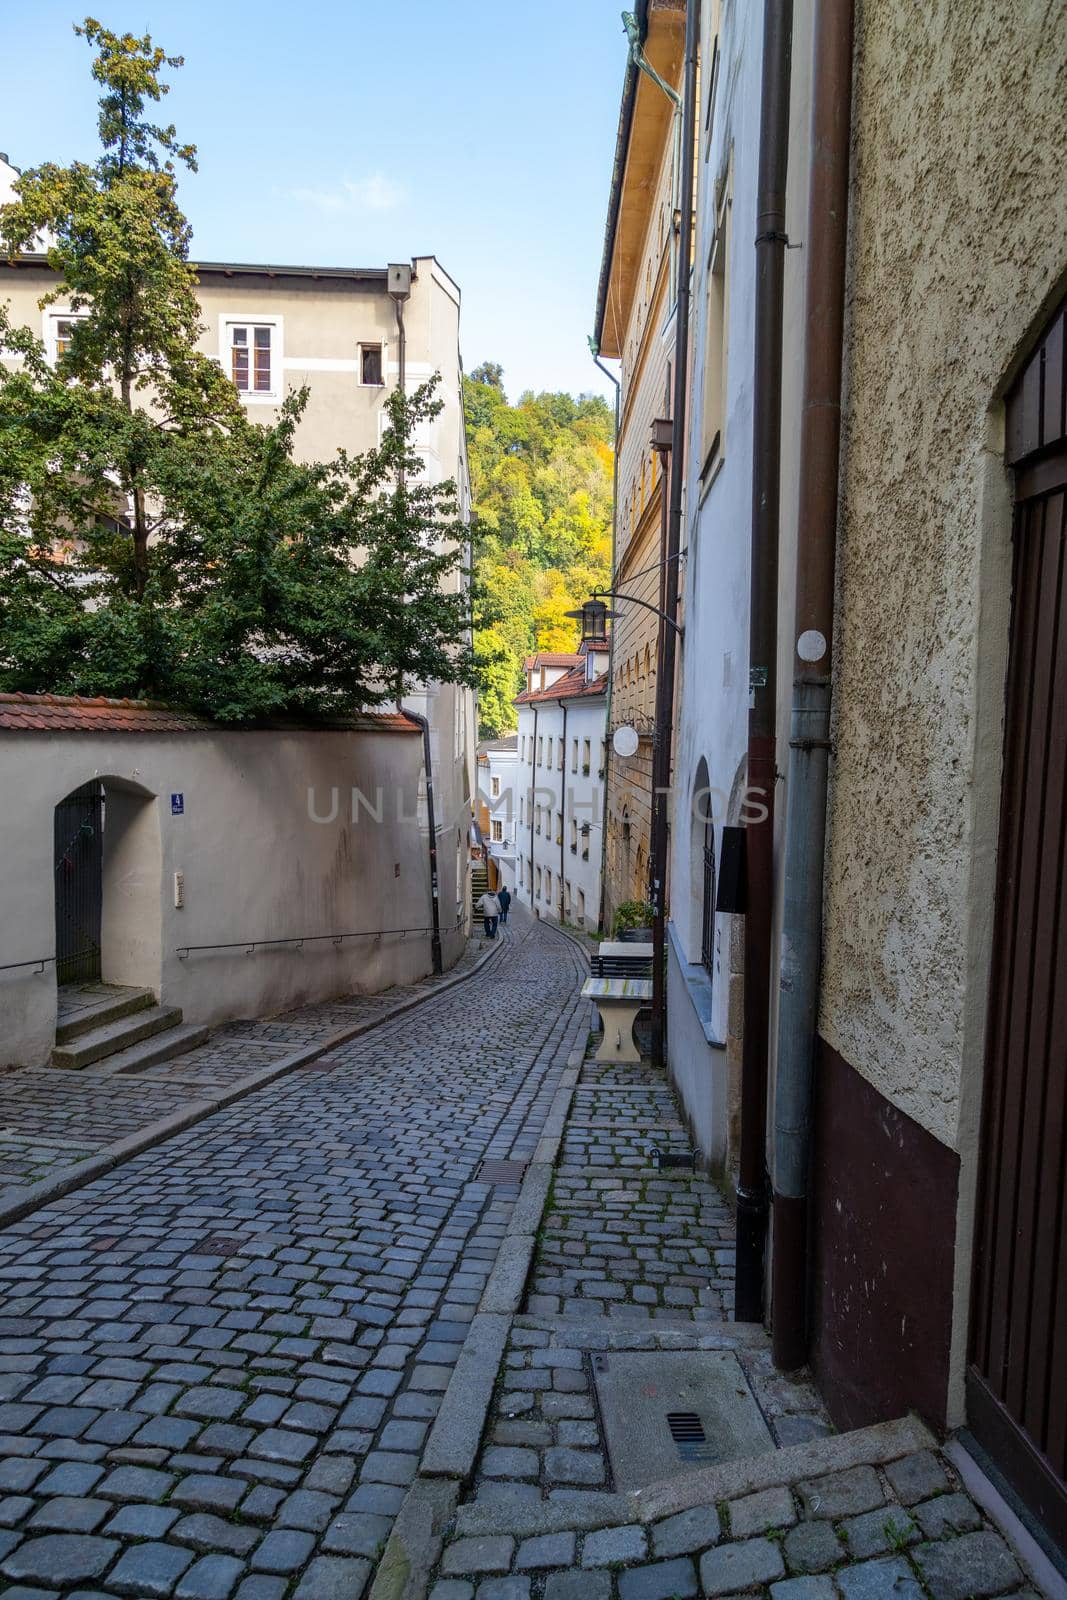 Narrow lane, alley with cobblestone pavement im Passau, Bavaria, Germany  by reinerc